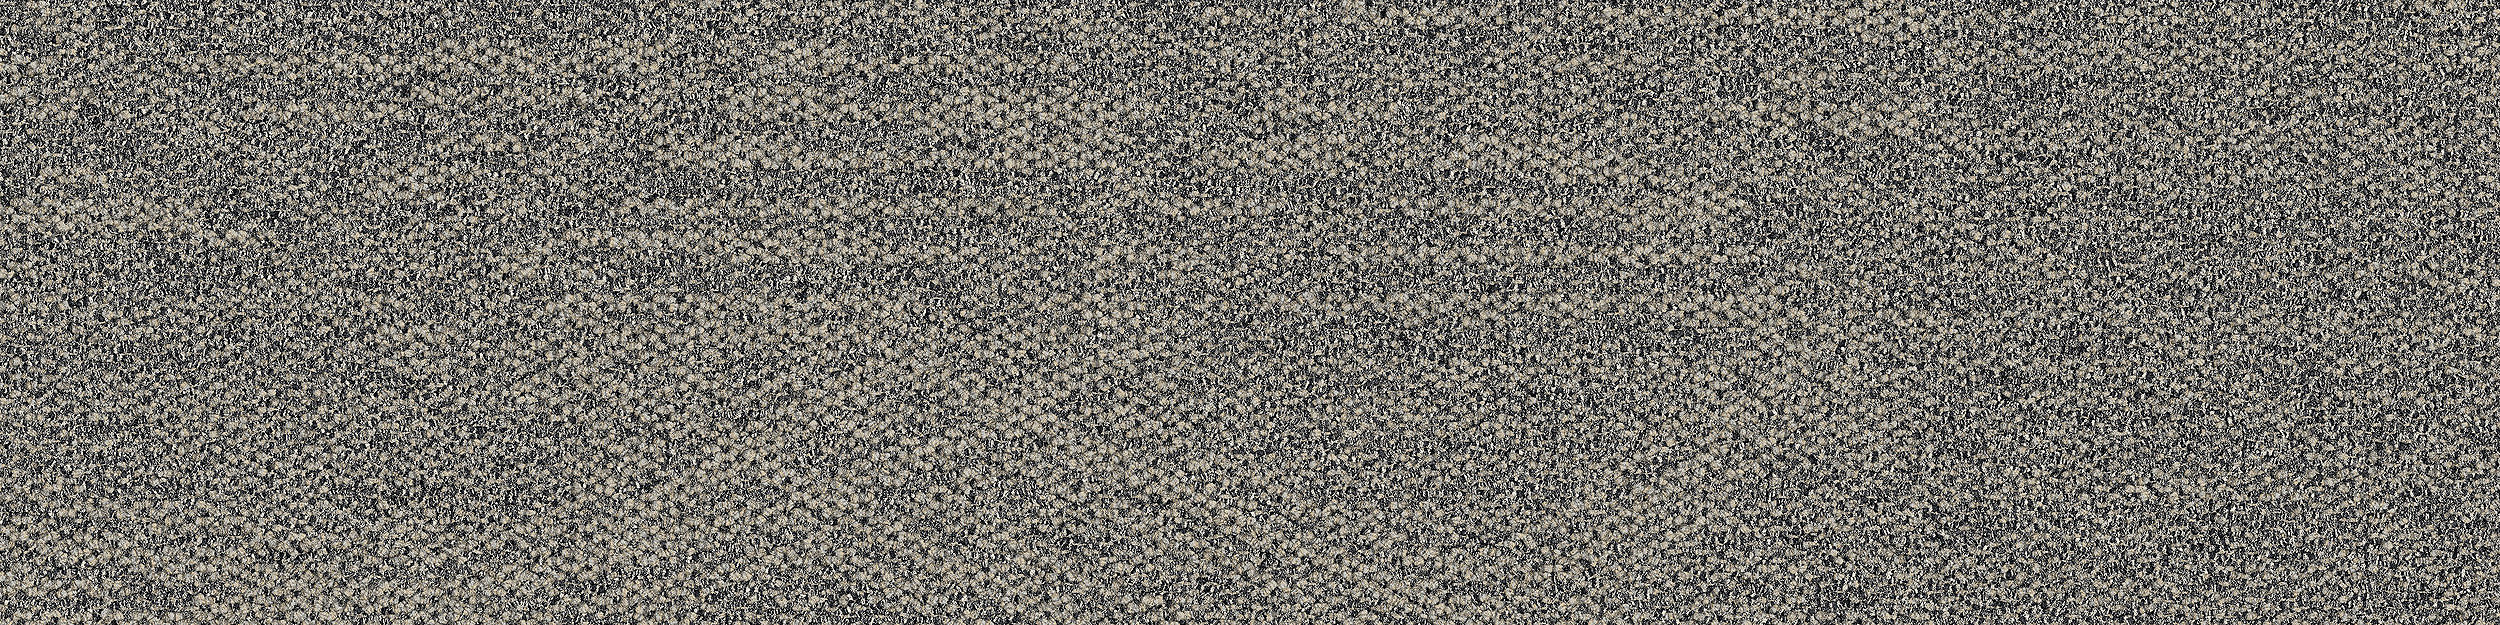 Open Air 409 Carpet Tile In Natural imagen número 5